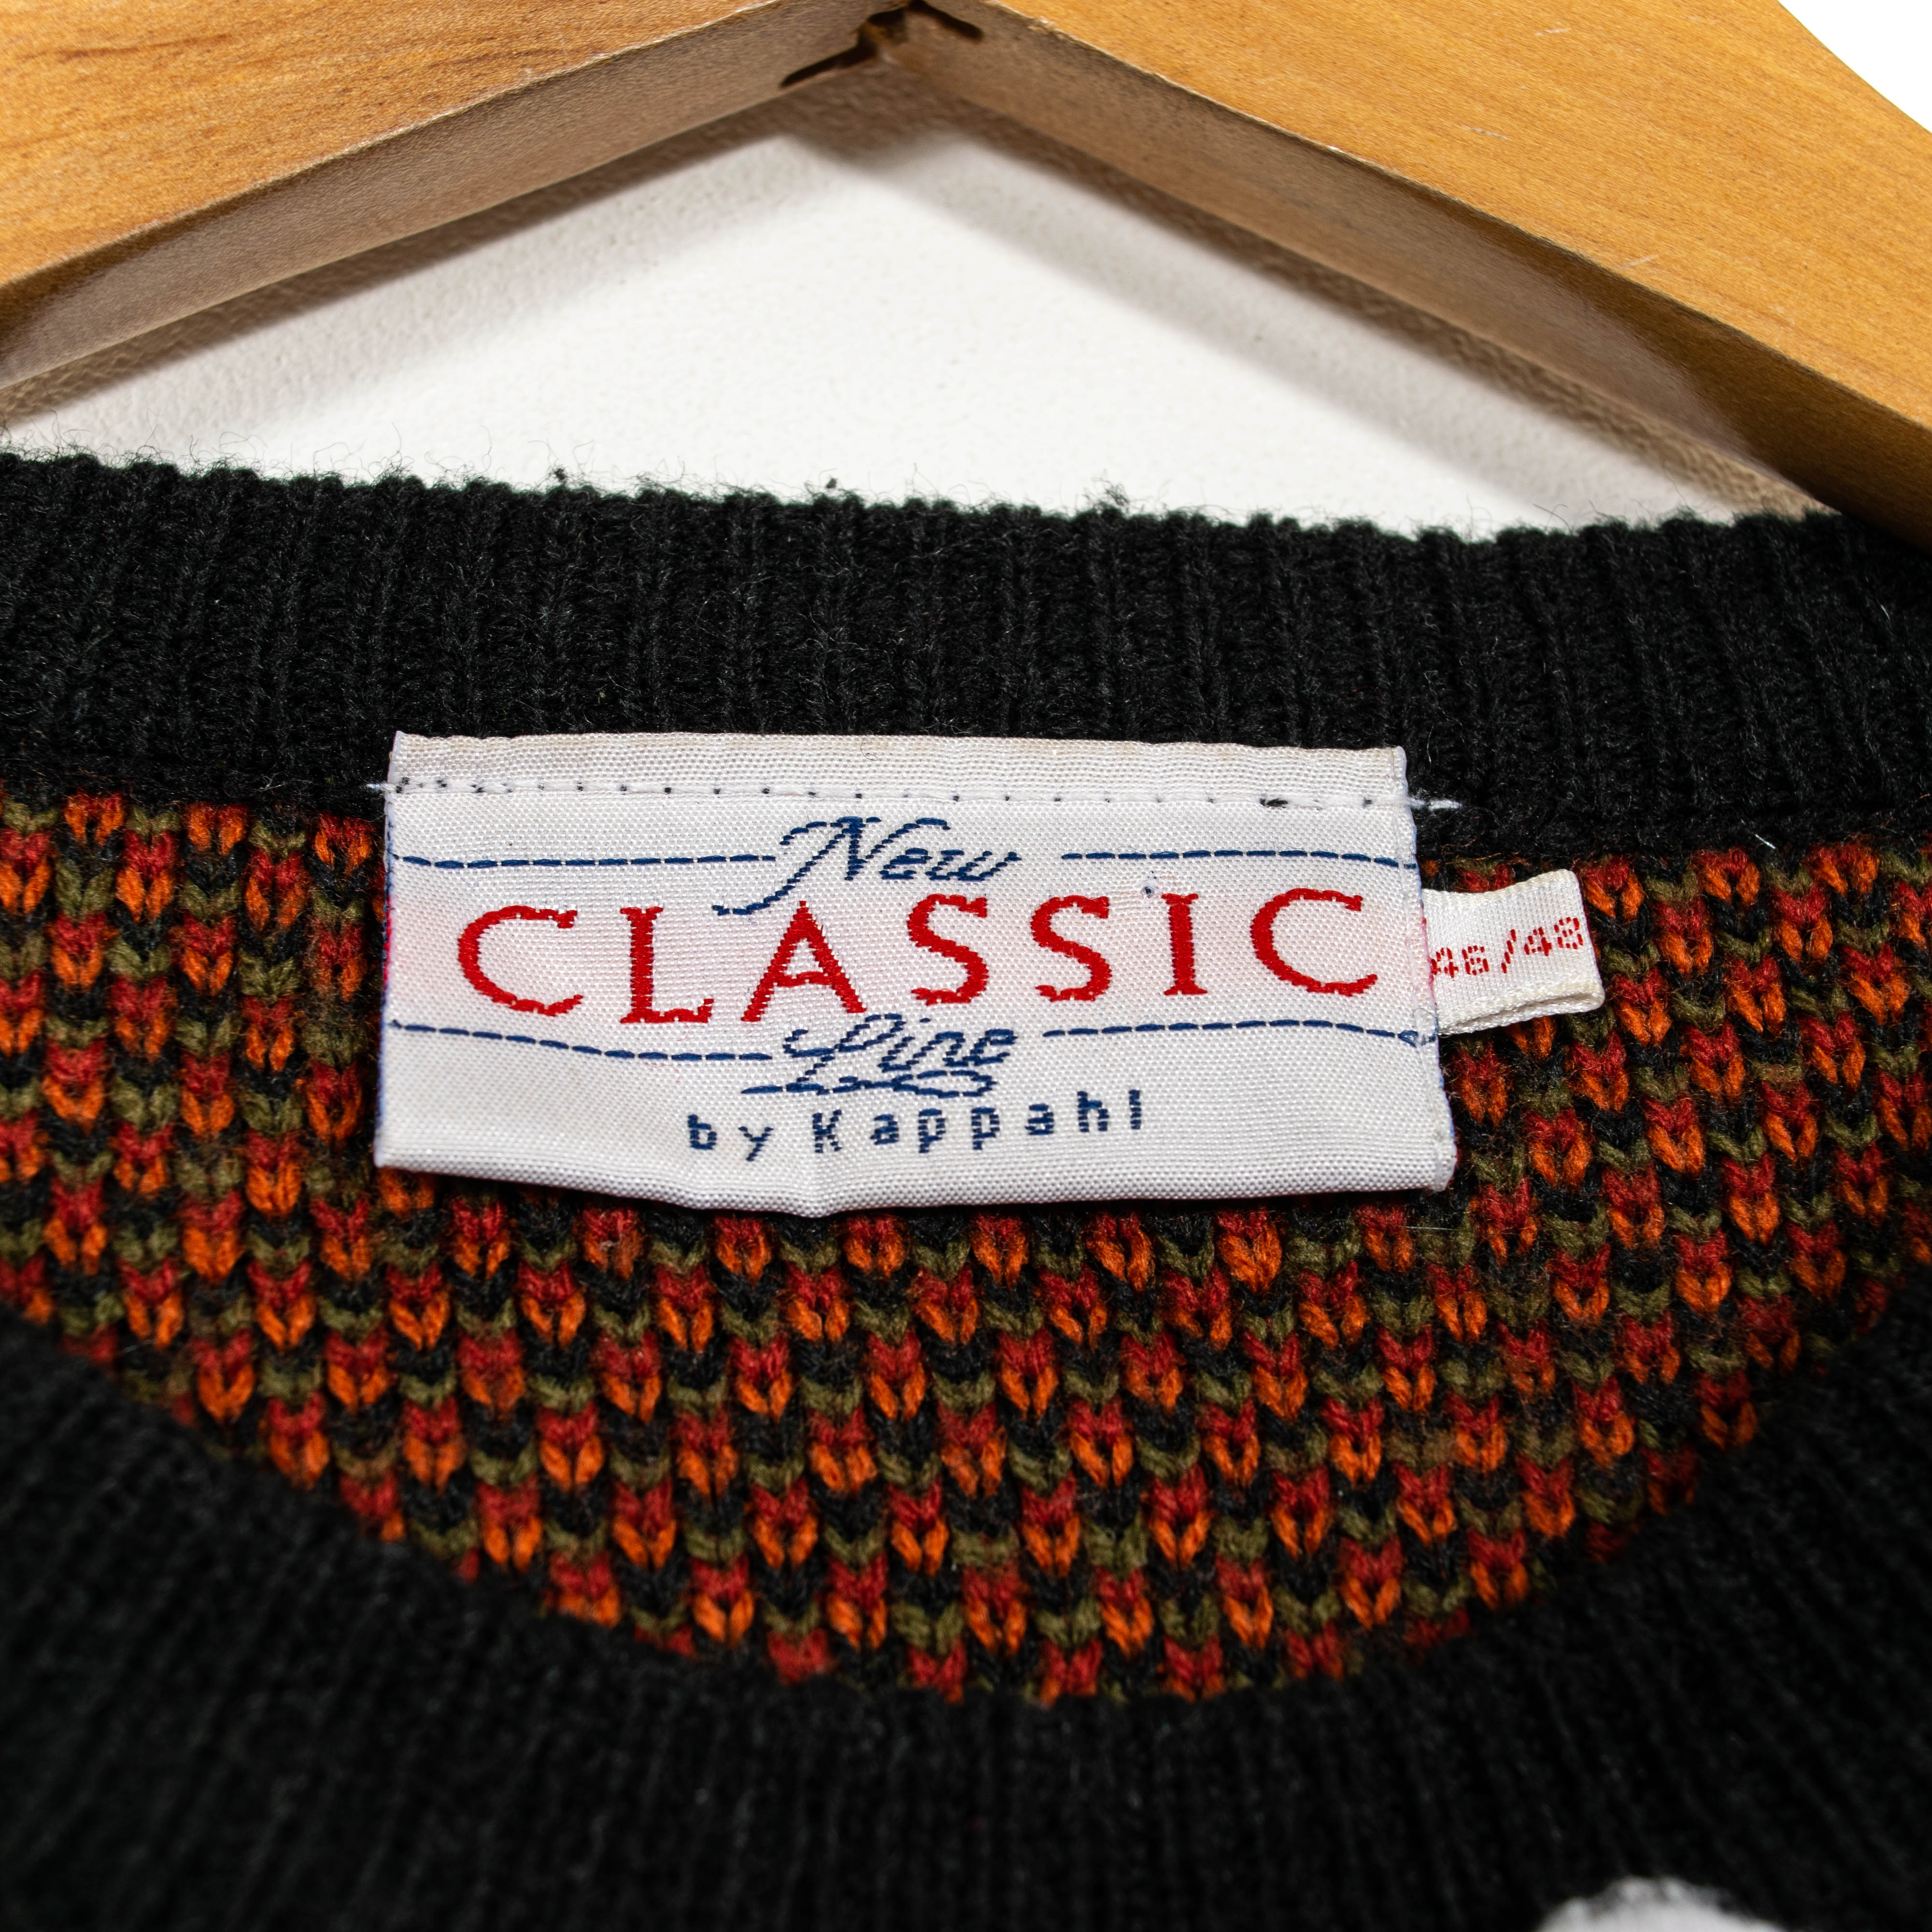 Vintage Black Wool Blend Pullover Knit Sweater Roses Floral Pattern Mens S